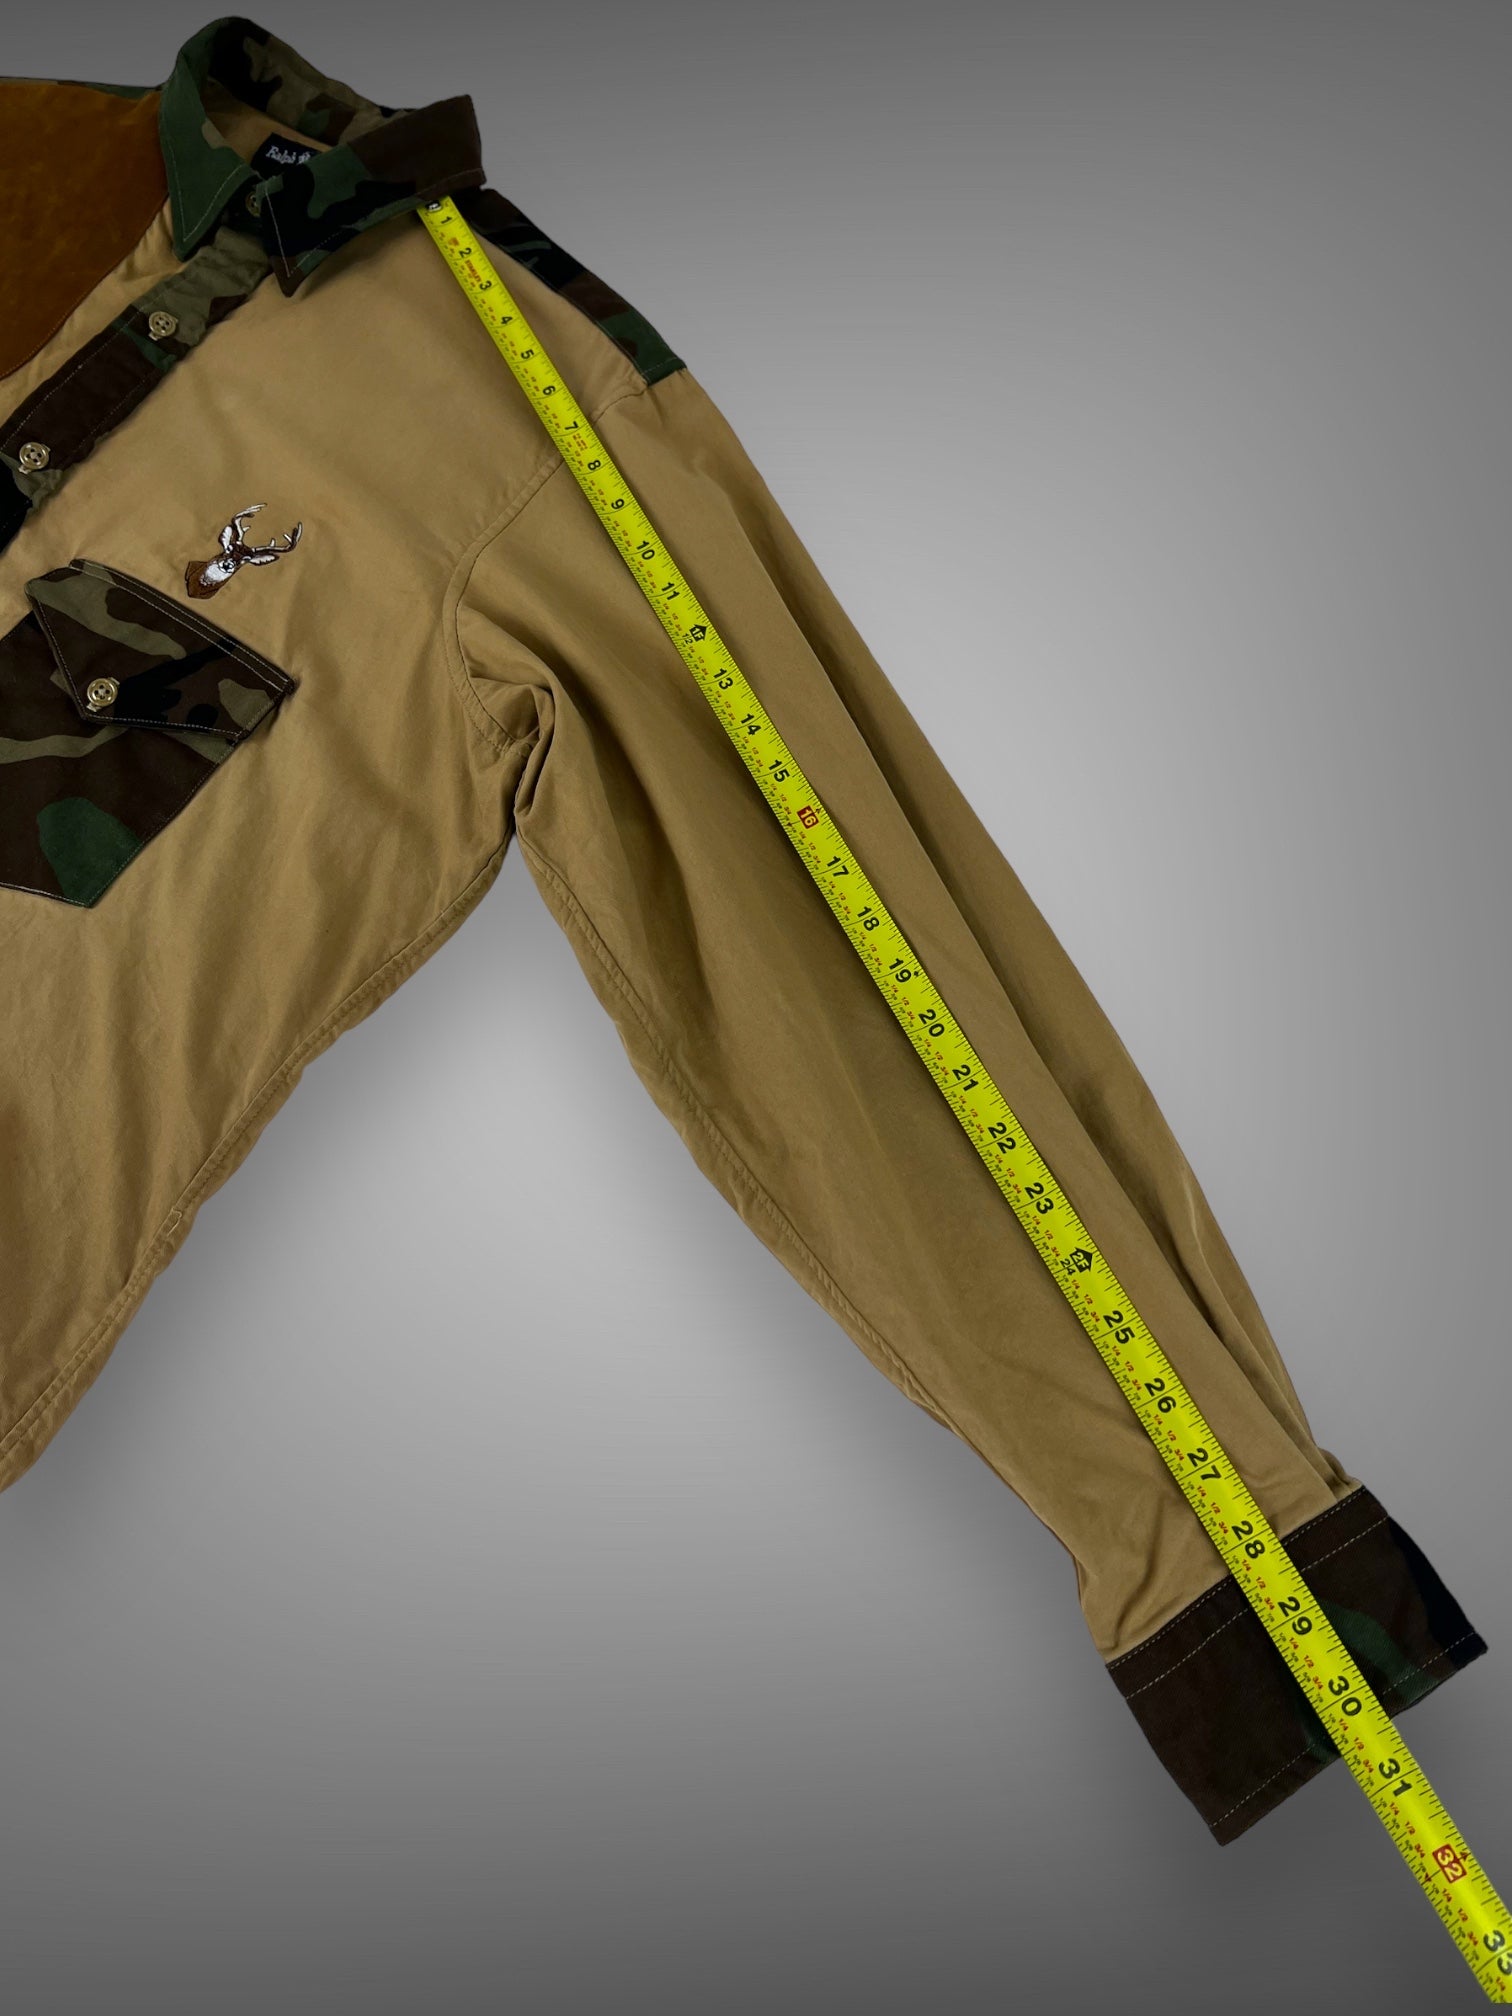 80s Ralph Lauren USA hunting button shirt suede accents XL